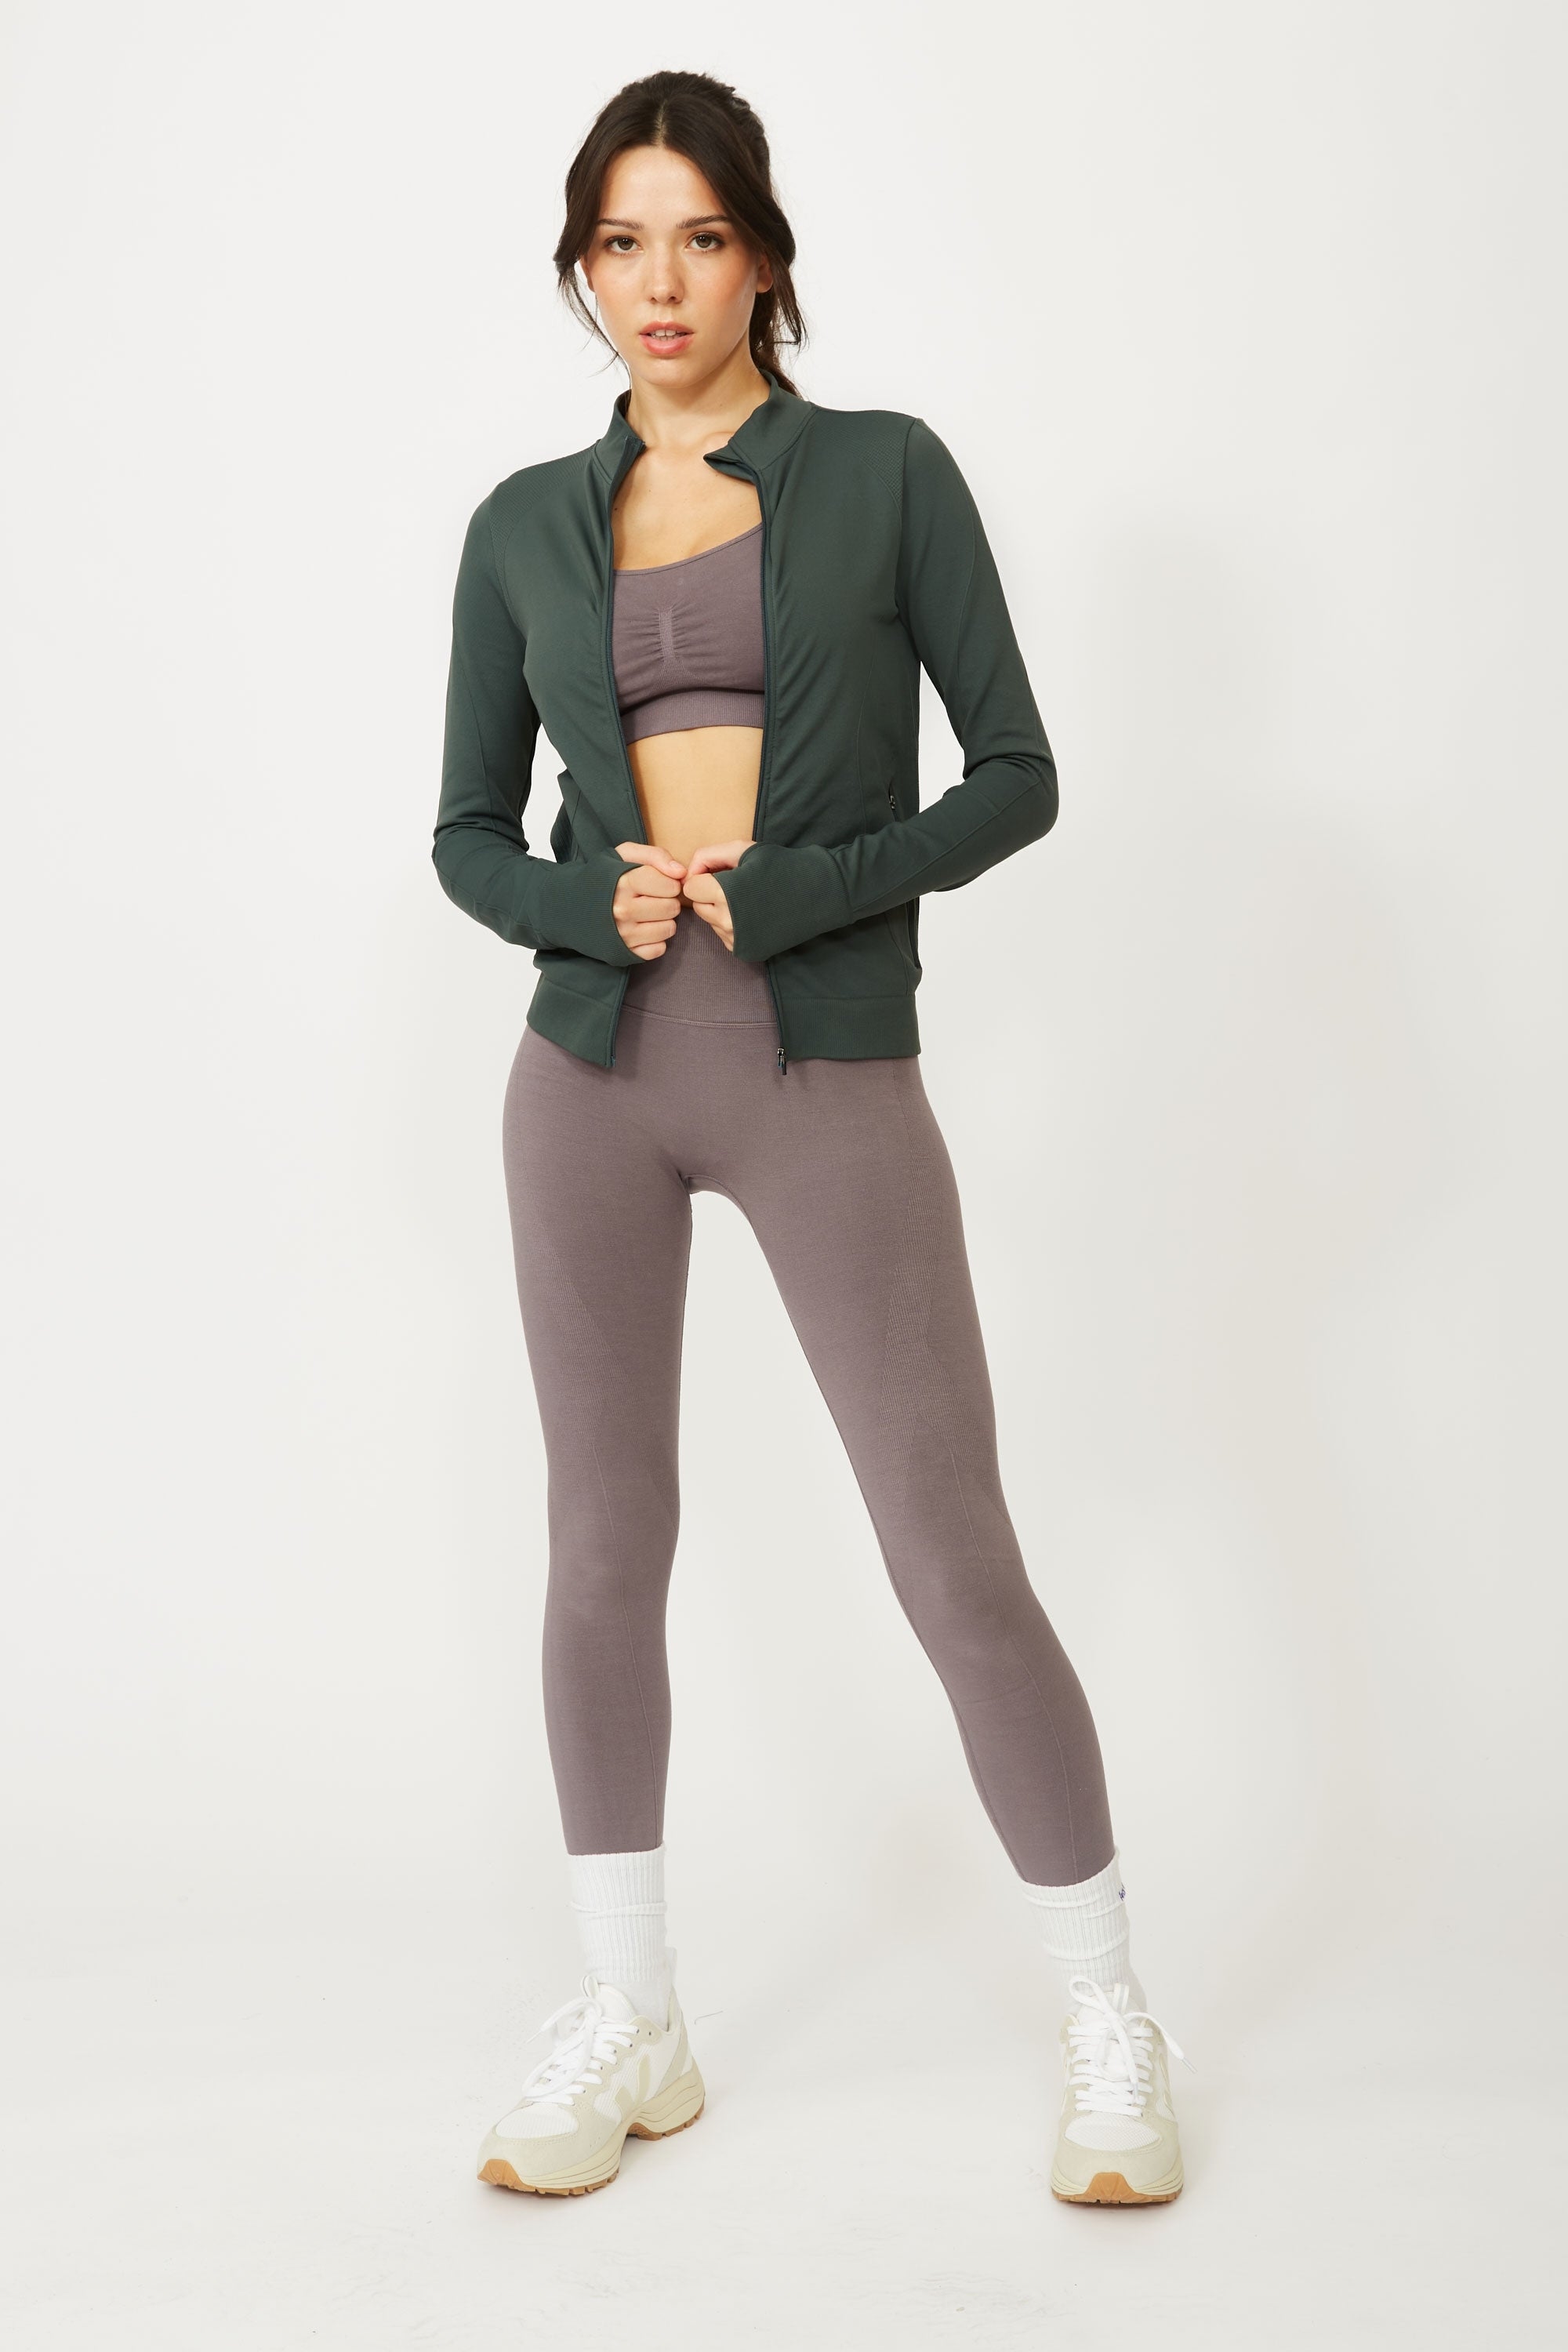 Model wearing green jacket over beige activewear set for sustainable yoga brand, Jilla